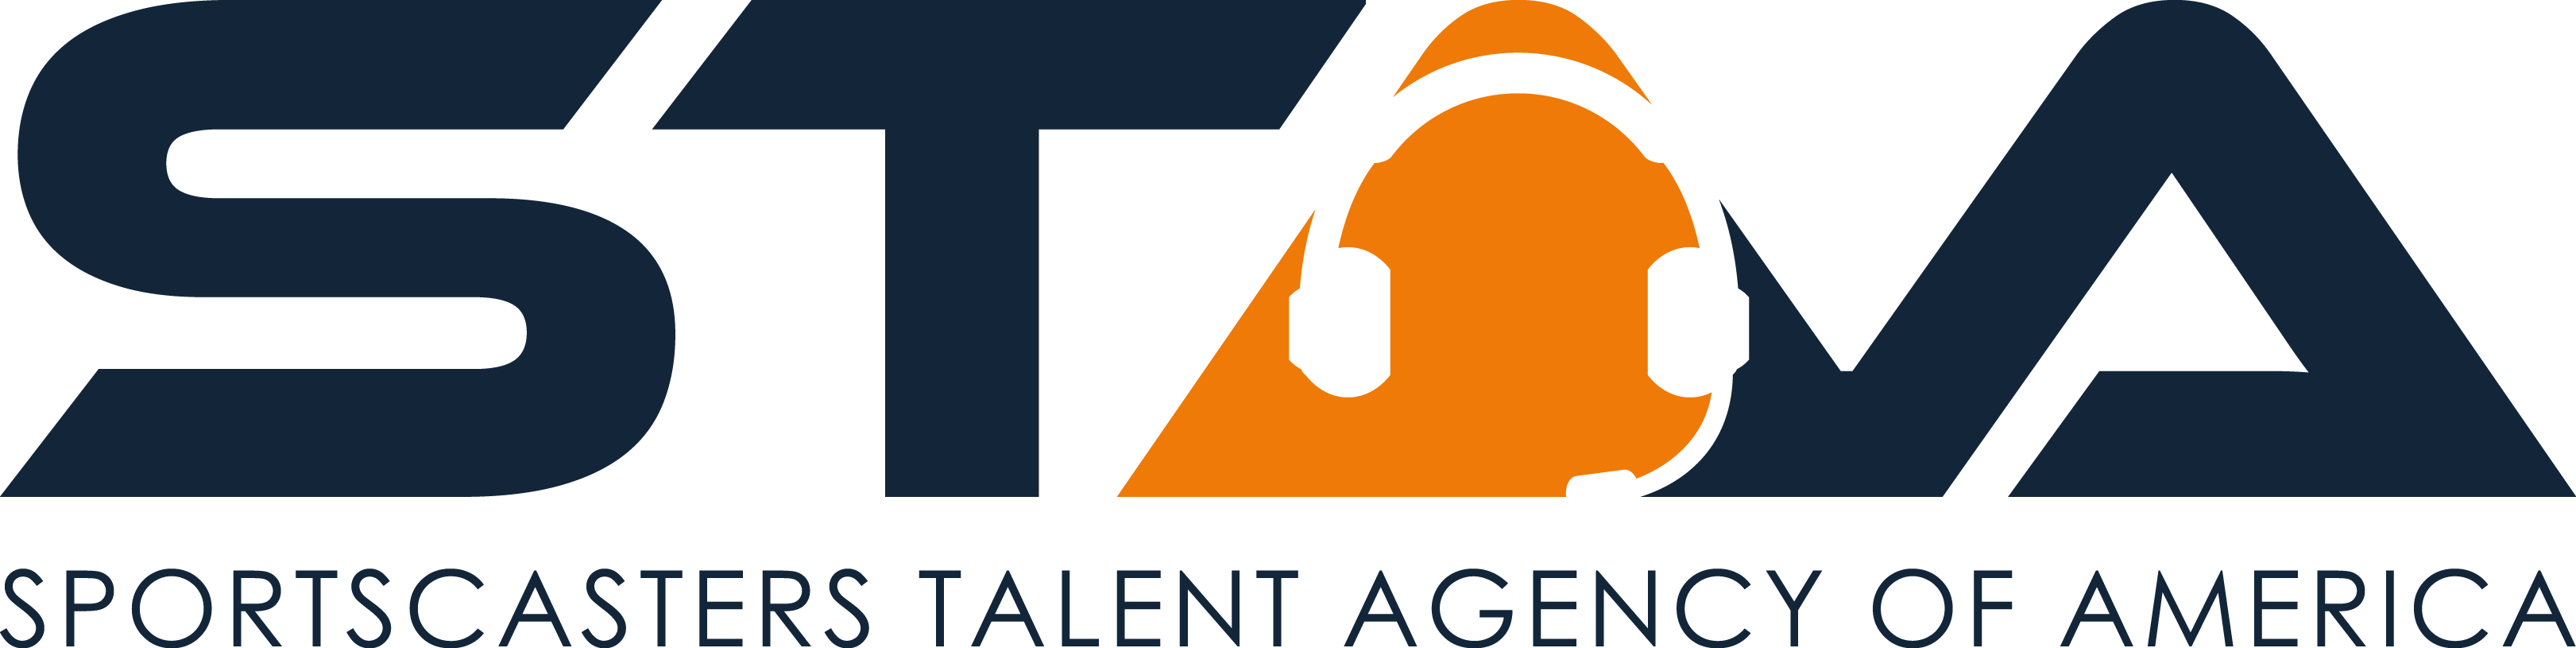 sportscasters talent agency of america logo